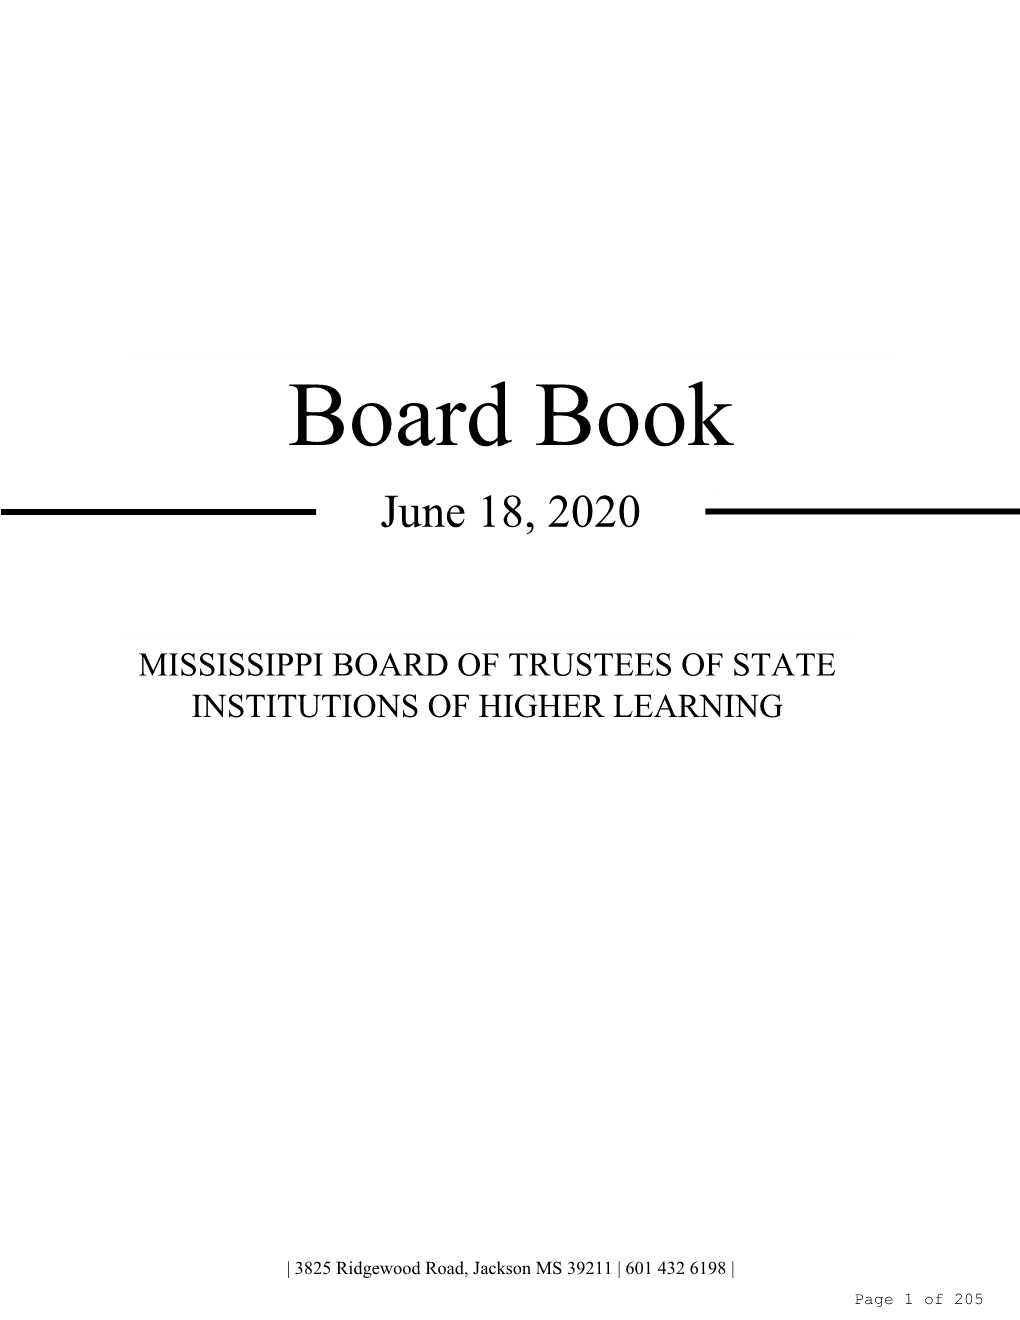 Board Book June 18, 2020